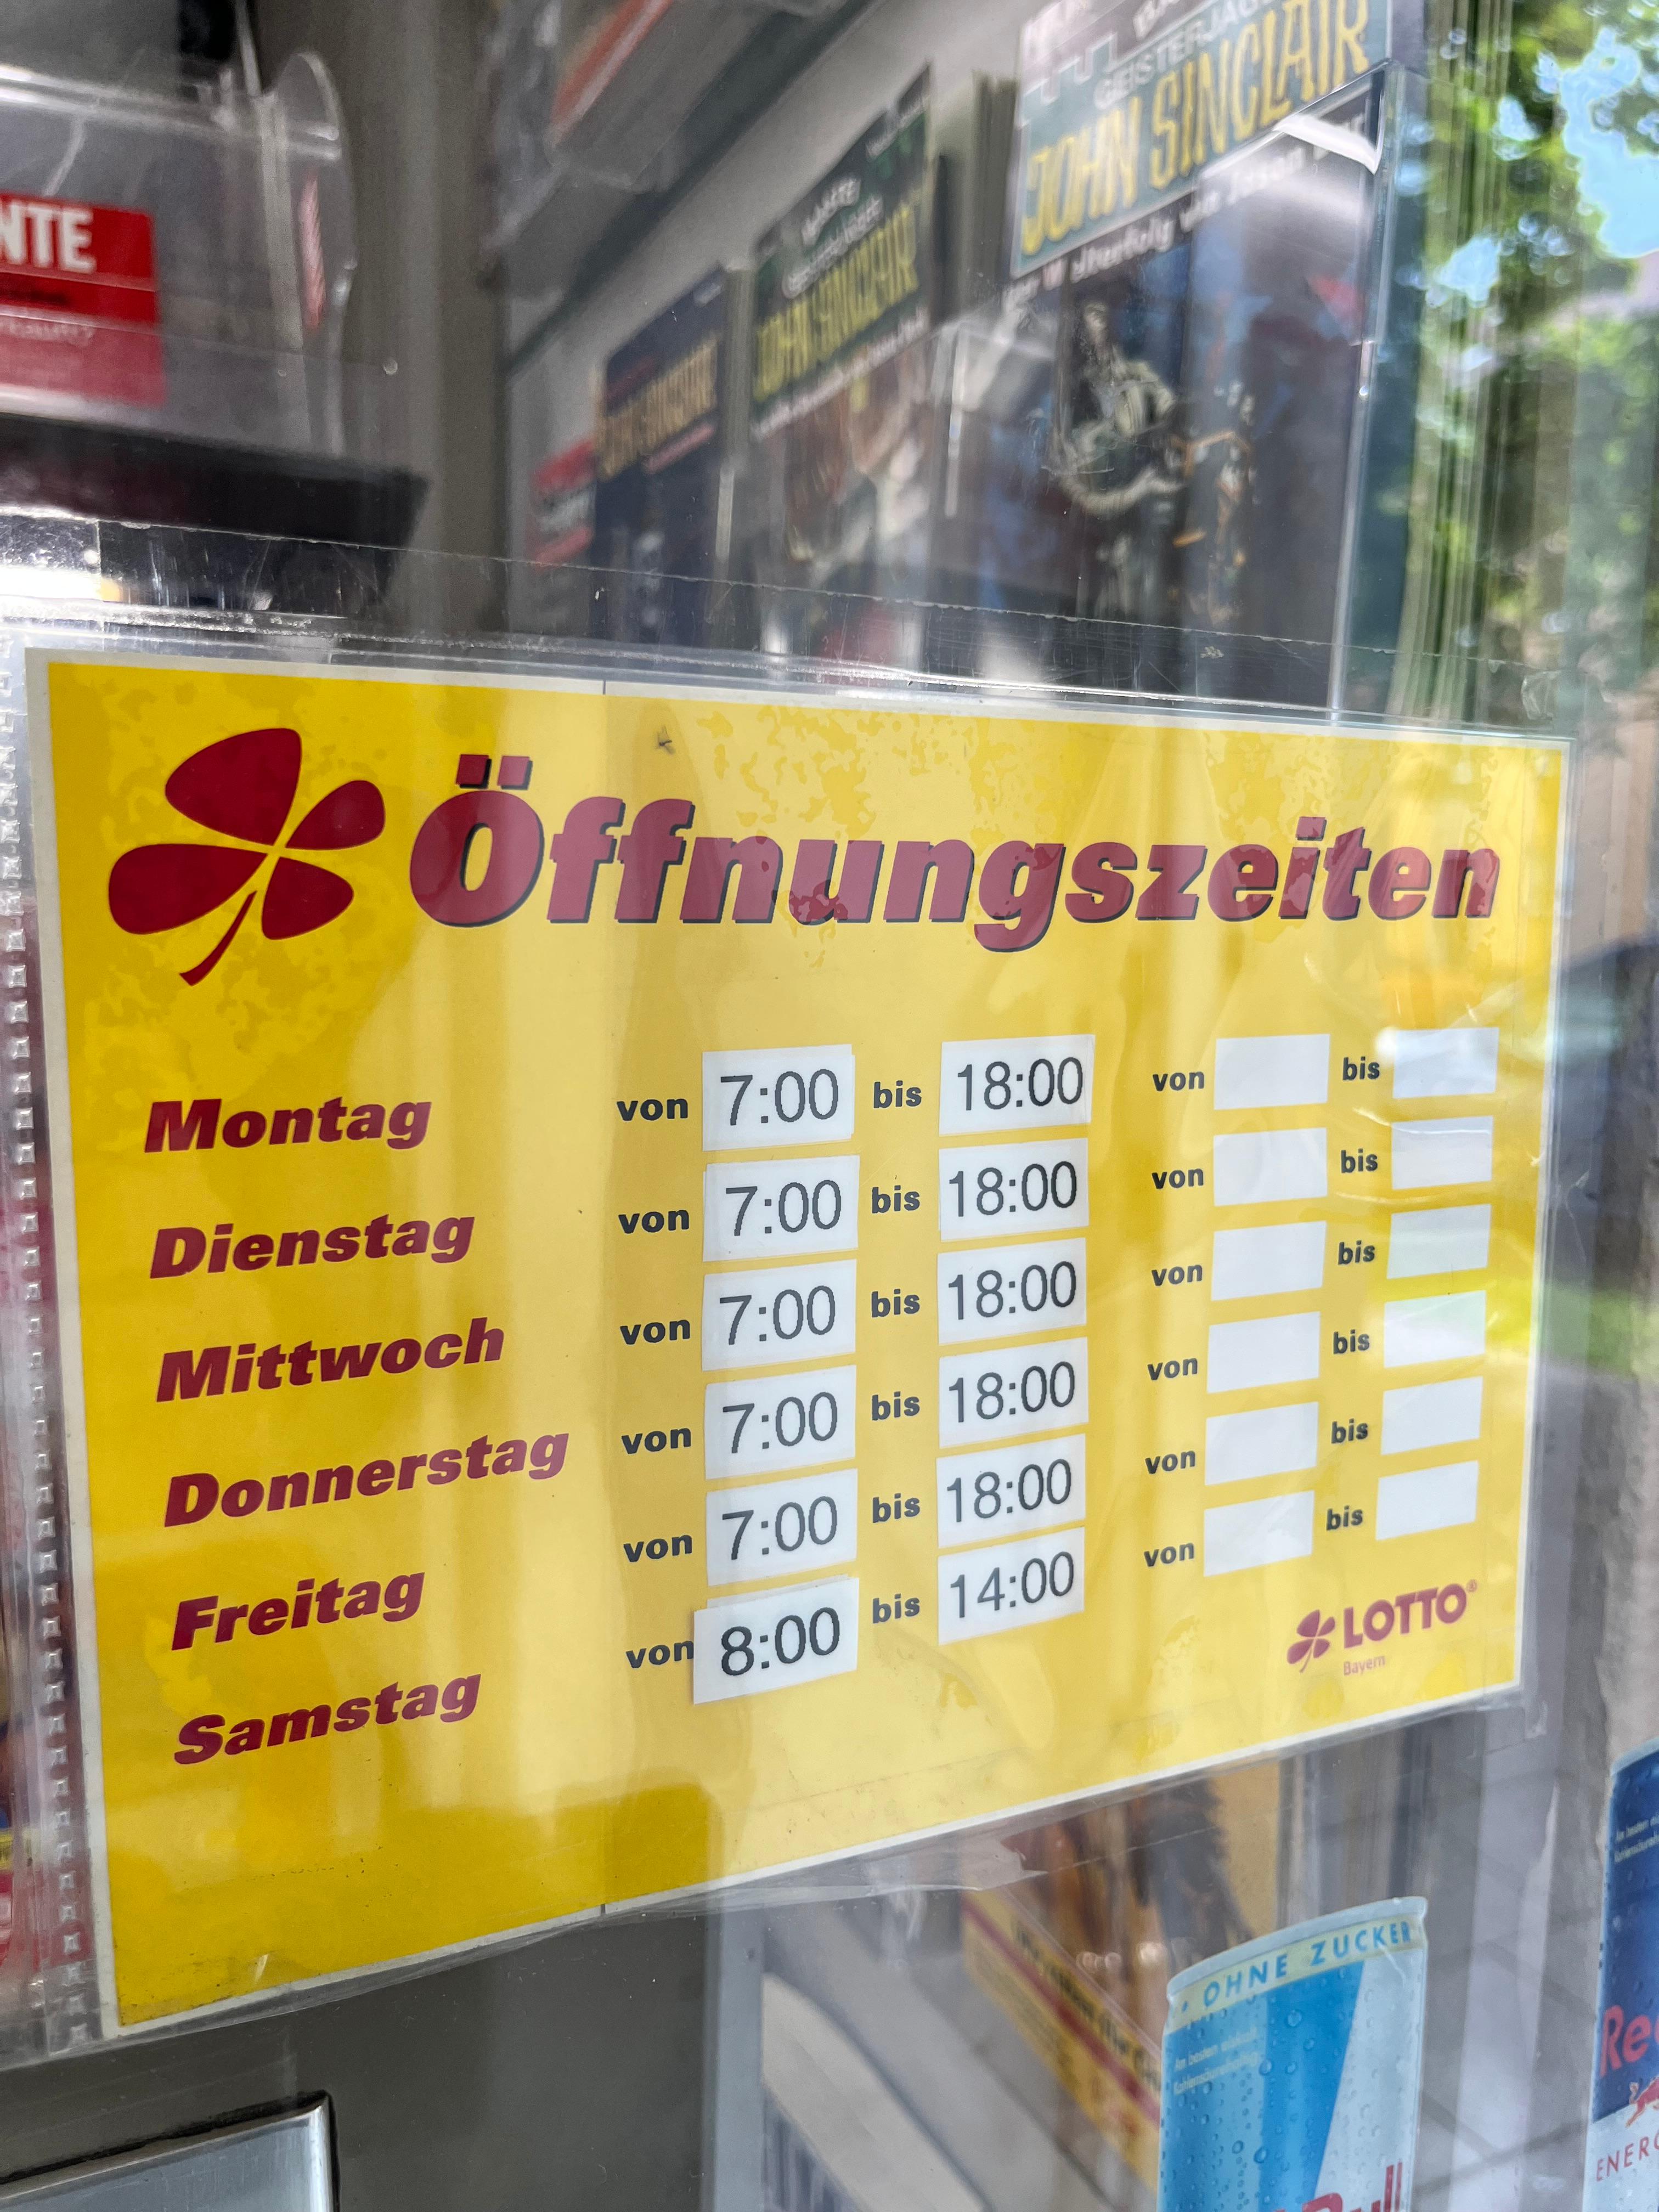 Lottoannahmestellen - Lotto-Geolex in München, Pilgersheimer Str. 70 in München